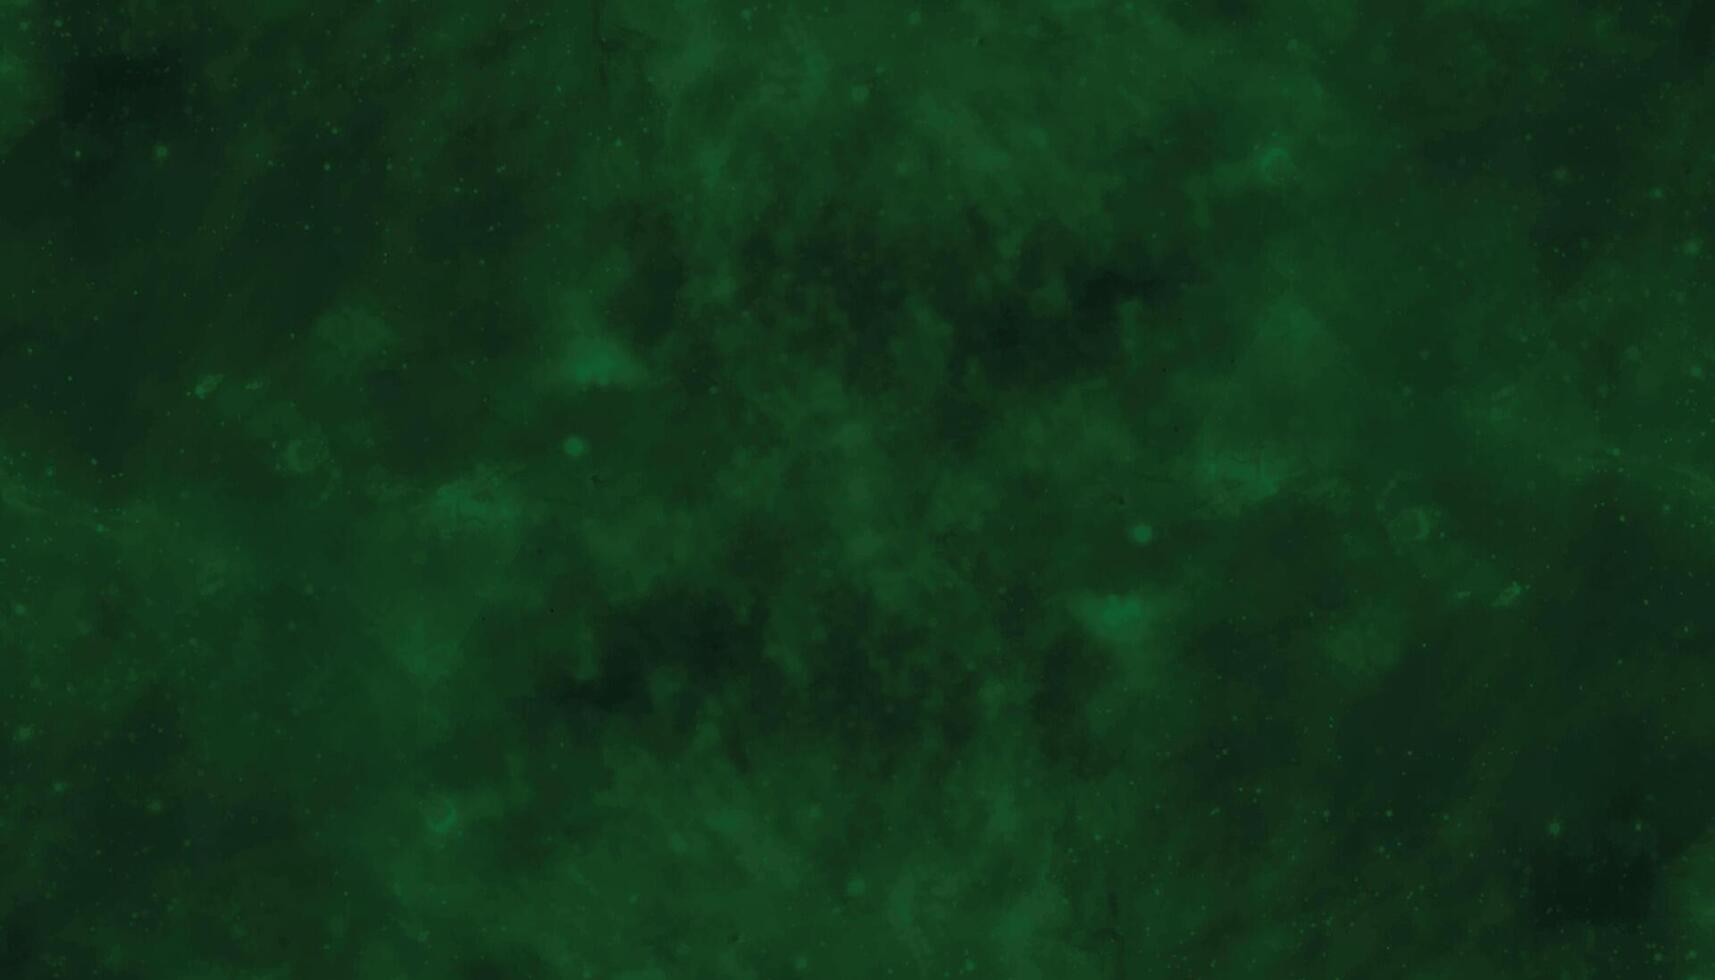 abstract green background. dark green watercolor texture. vector